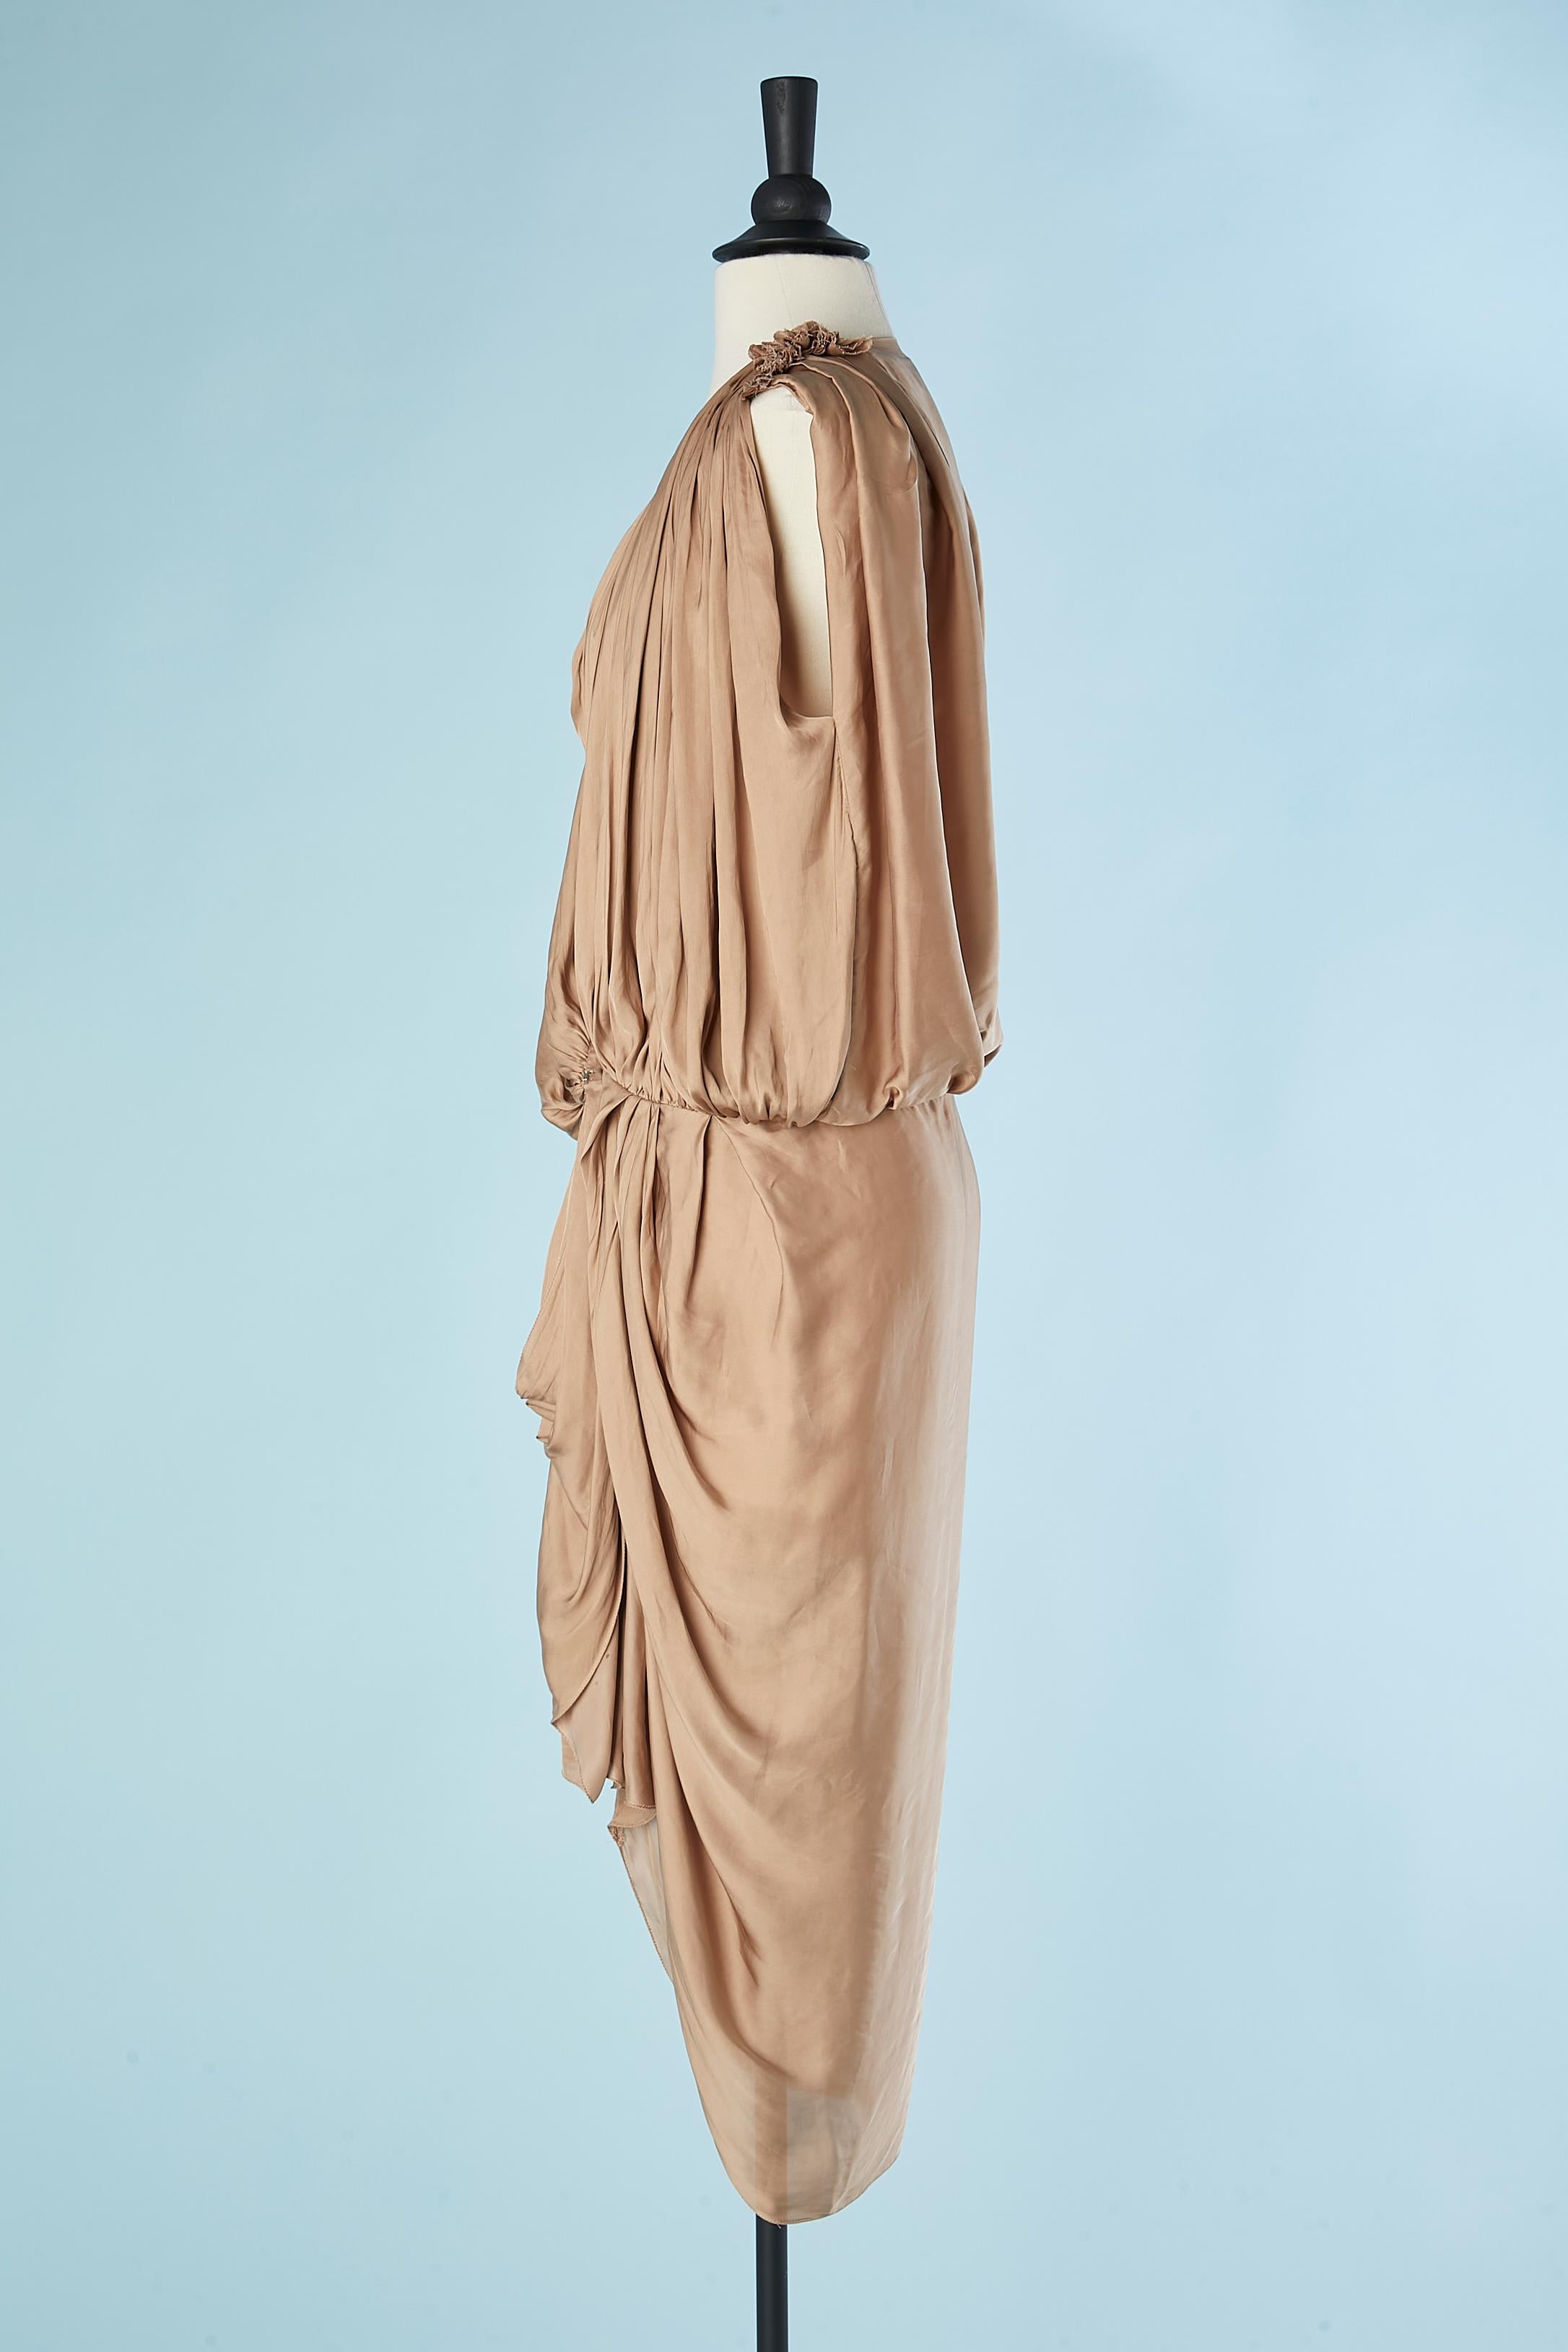 Women's Beige asymmetrical and drape silky cocktail dress Lanvin by Alber Elbaz